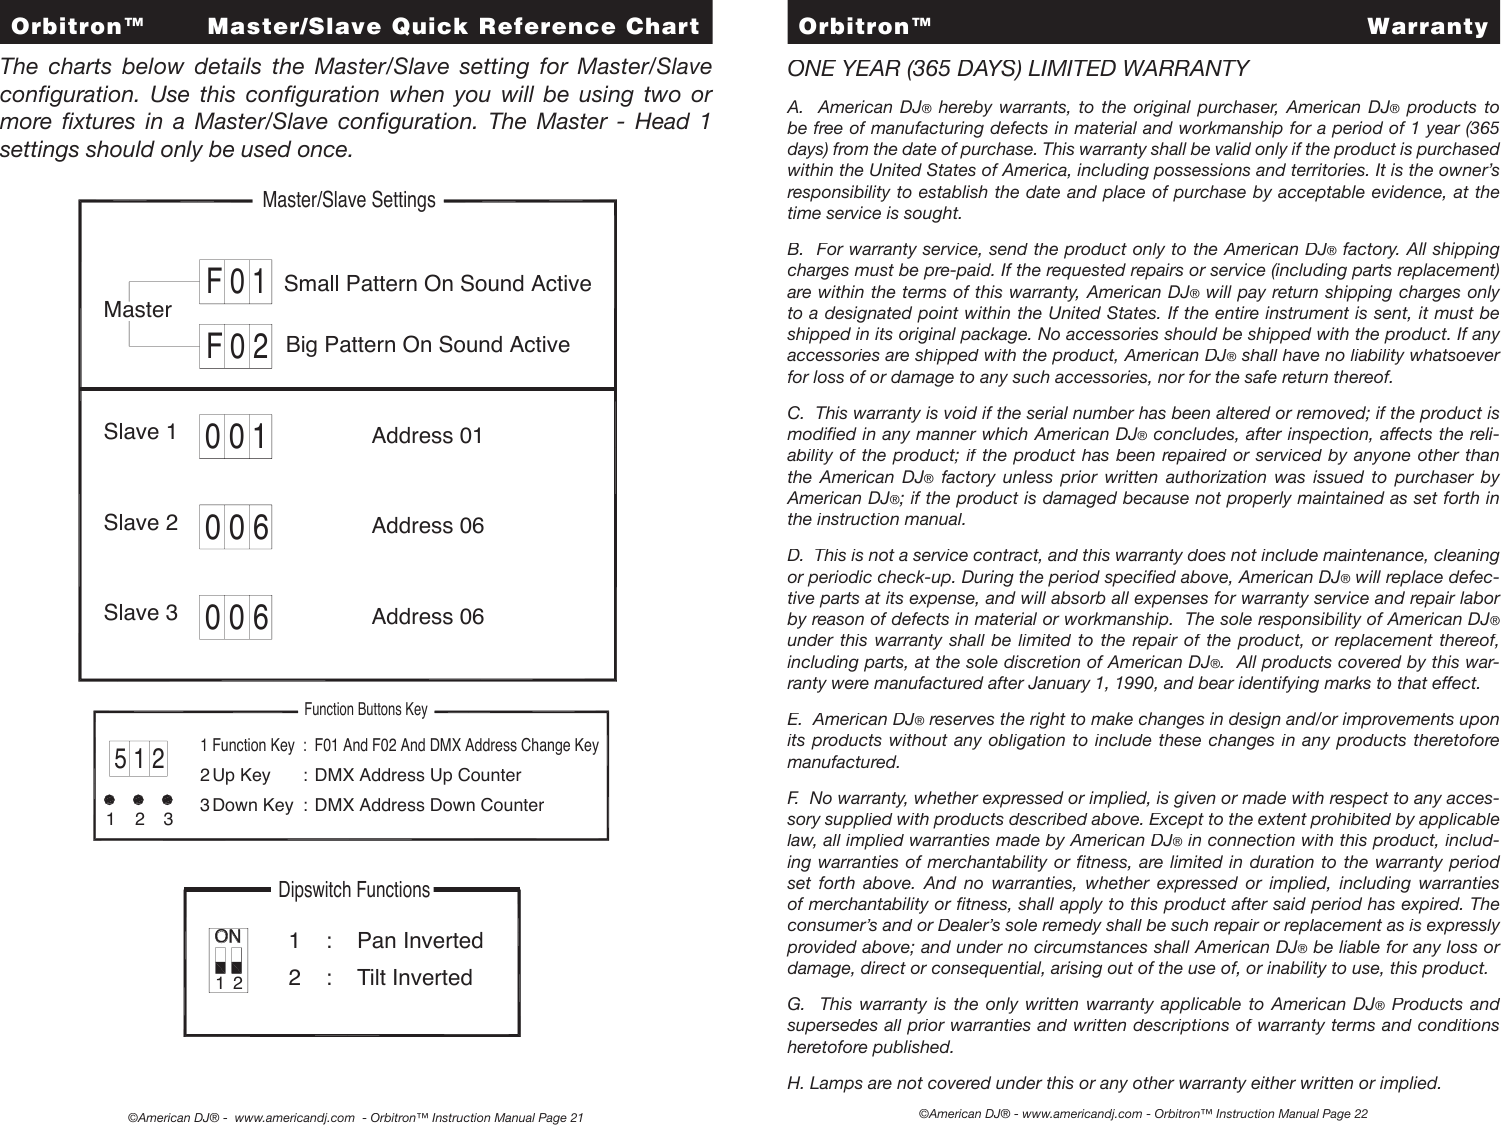 Page 11 of 12 - Orbitron User Manual